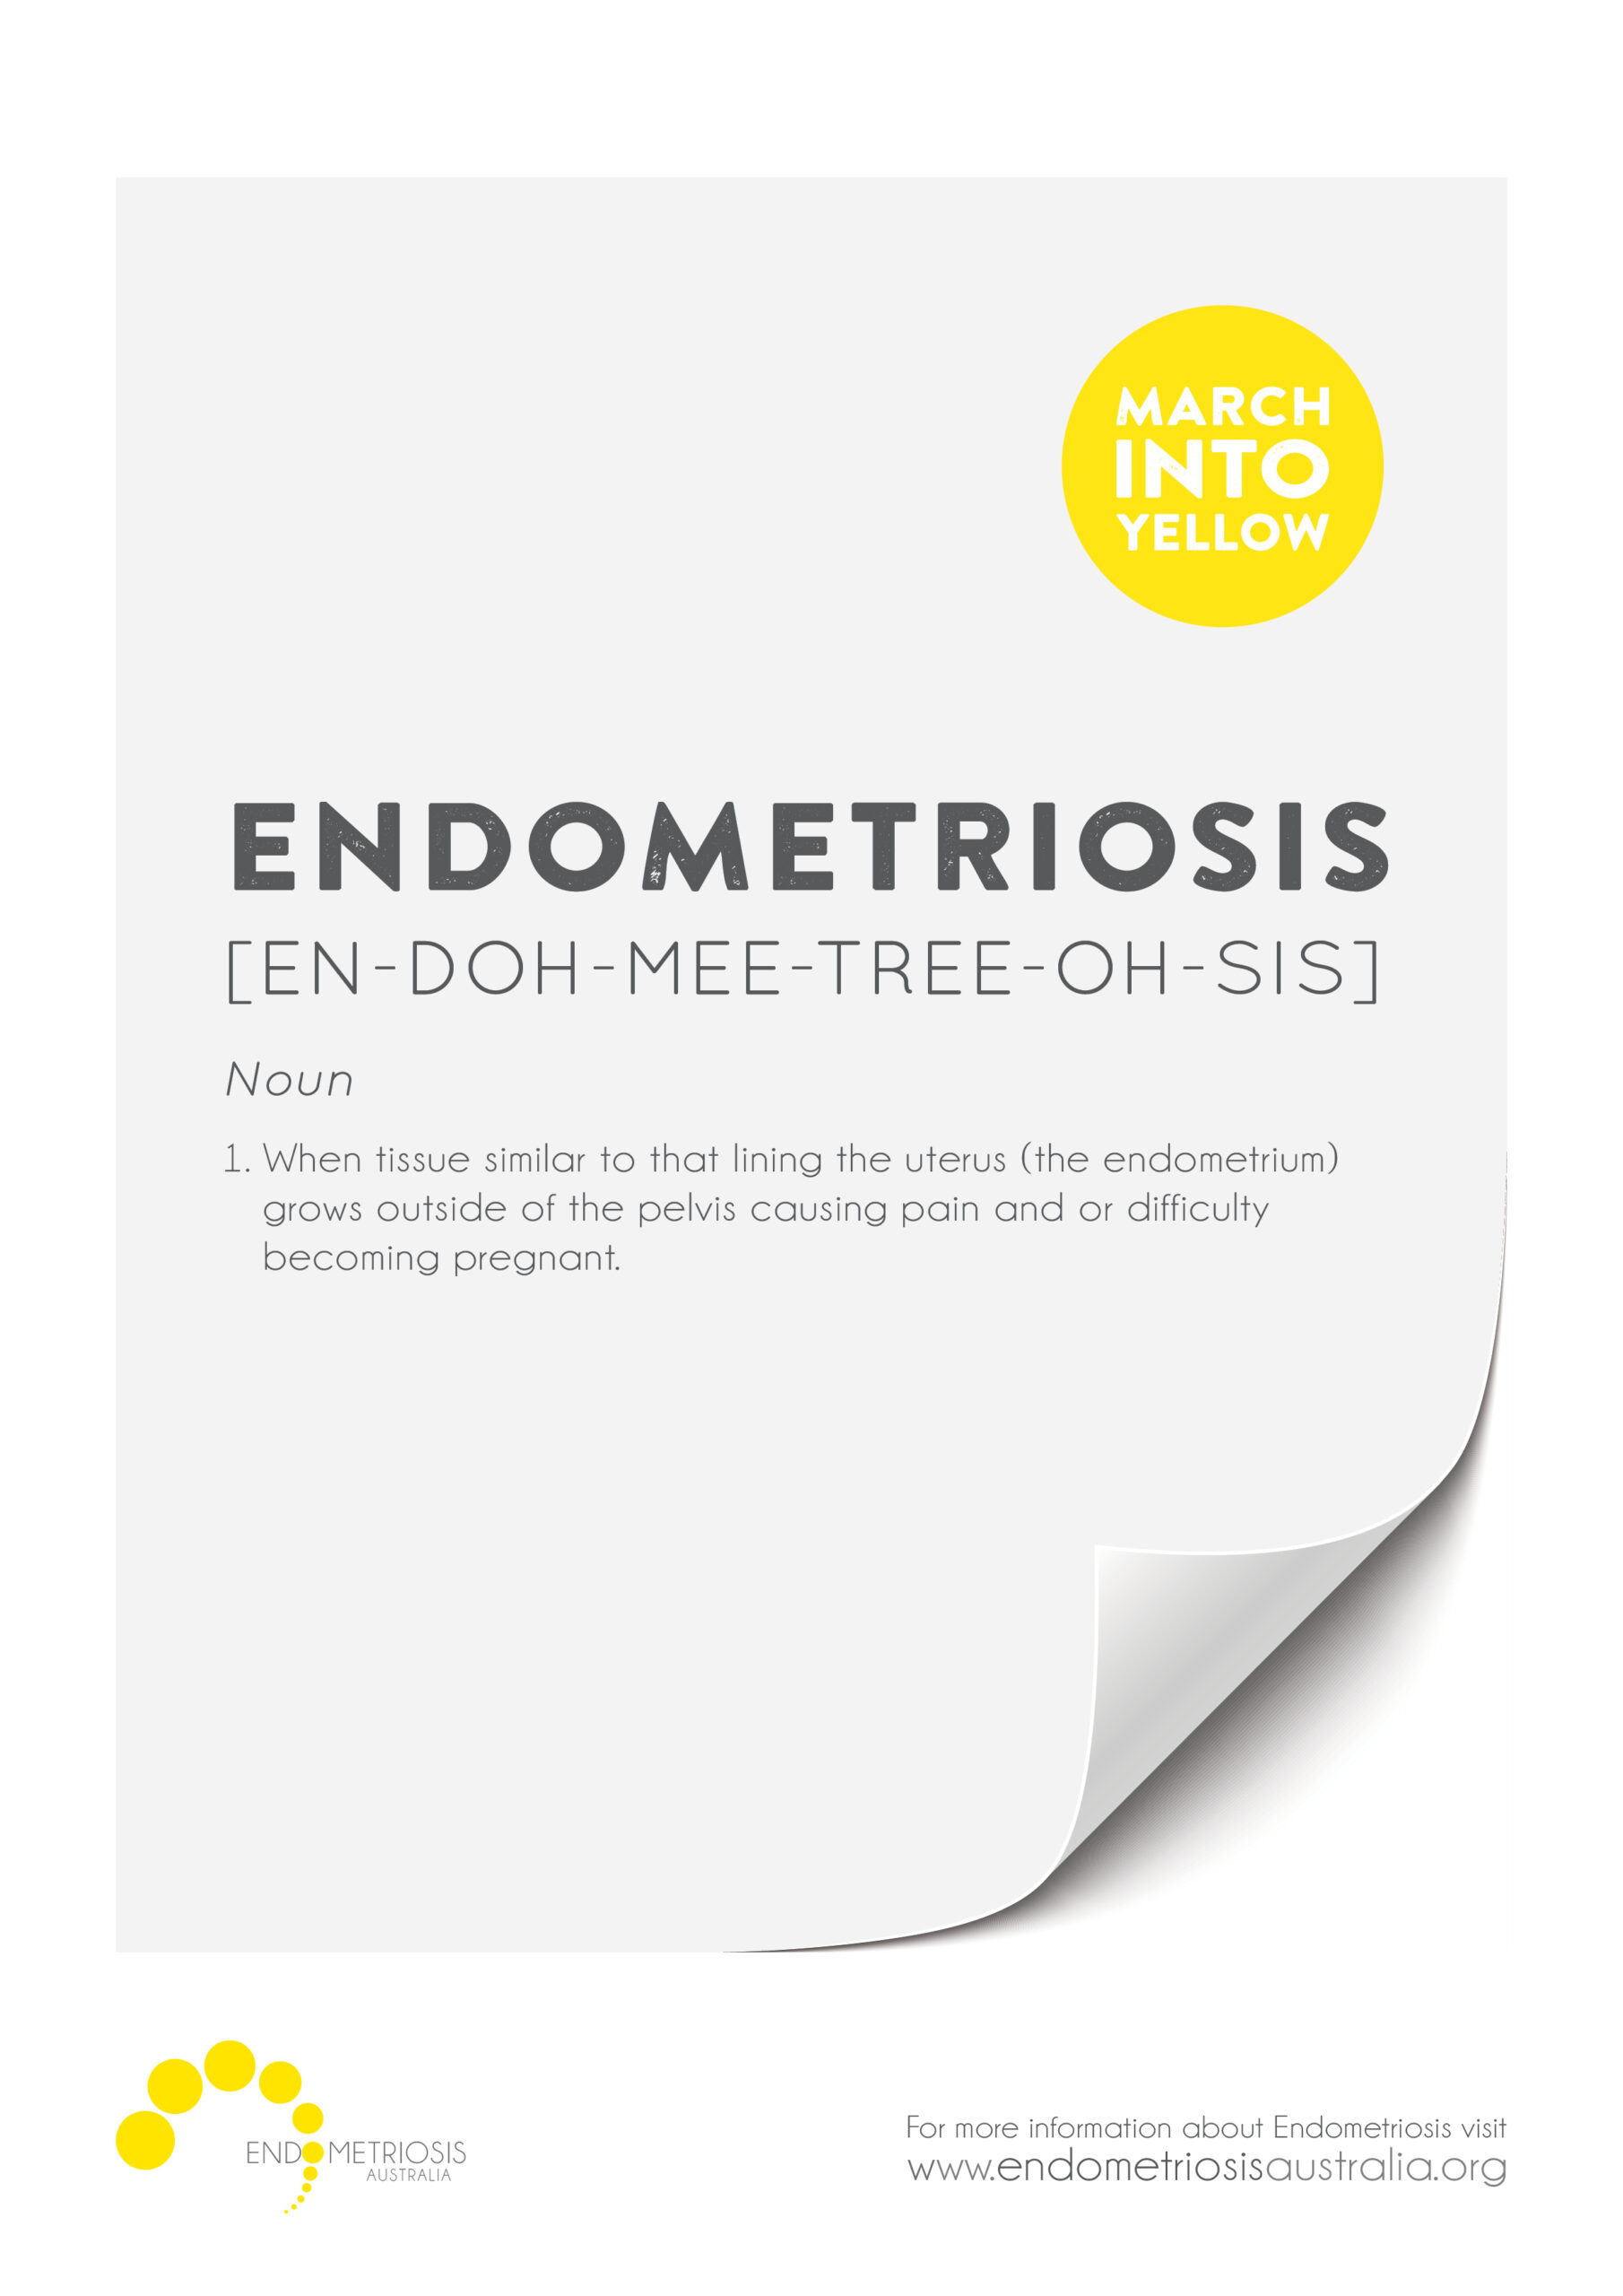 Is endometriosis an autoimmune disease?